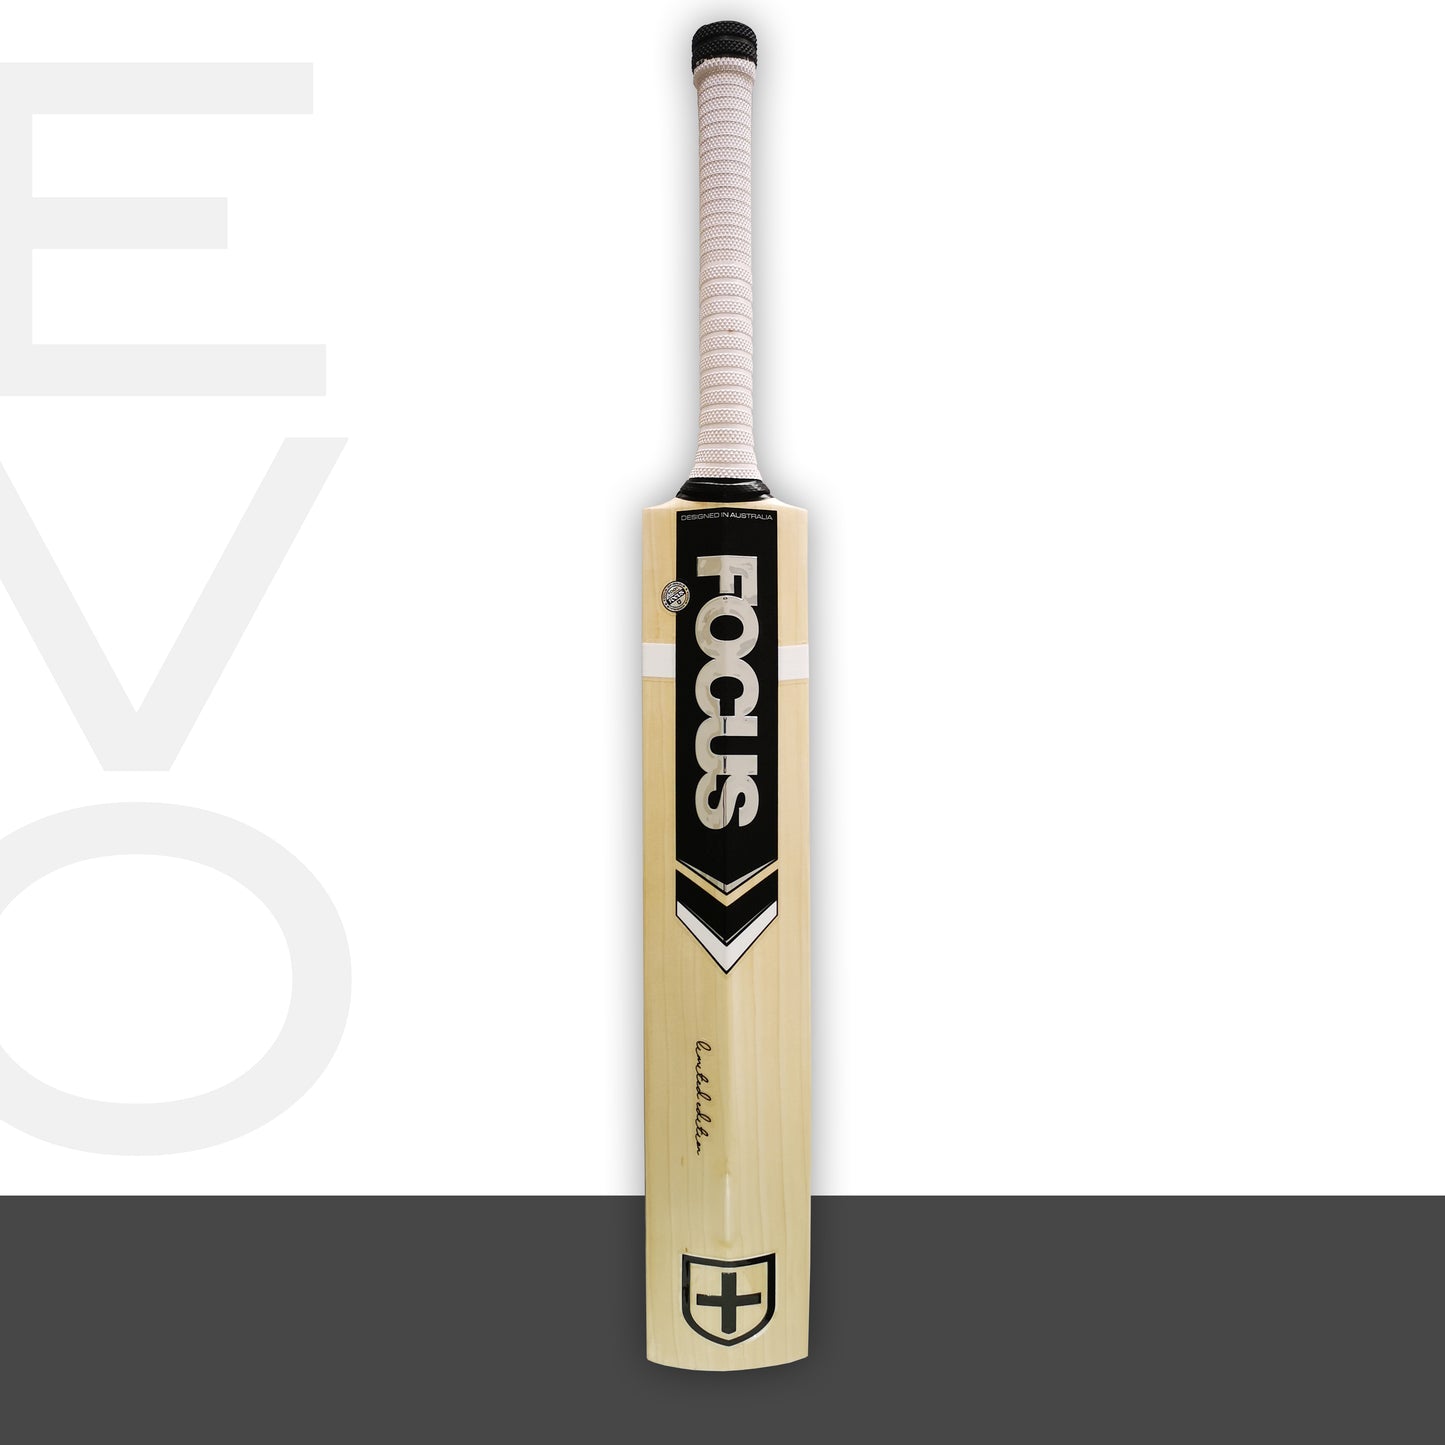 Focus Cricket - Short Handle - Evo Limited